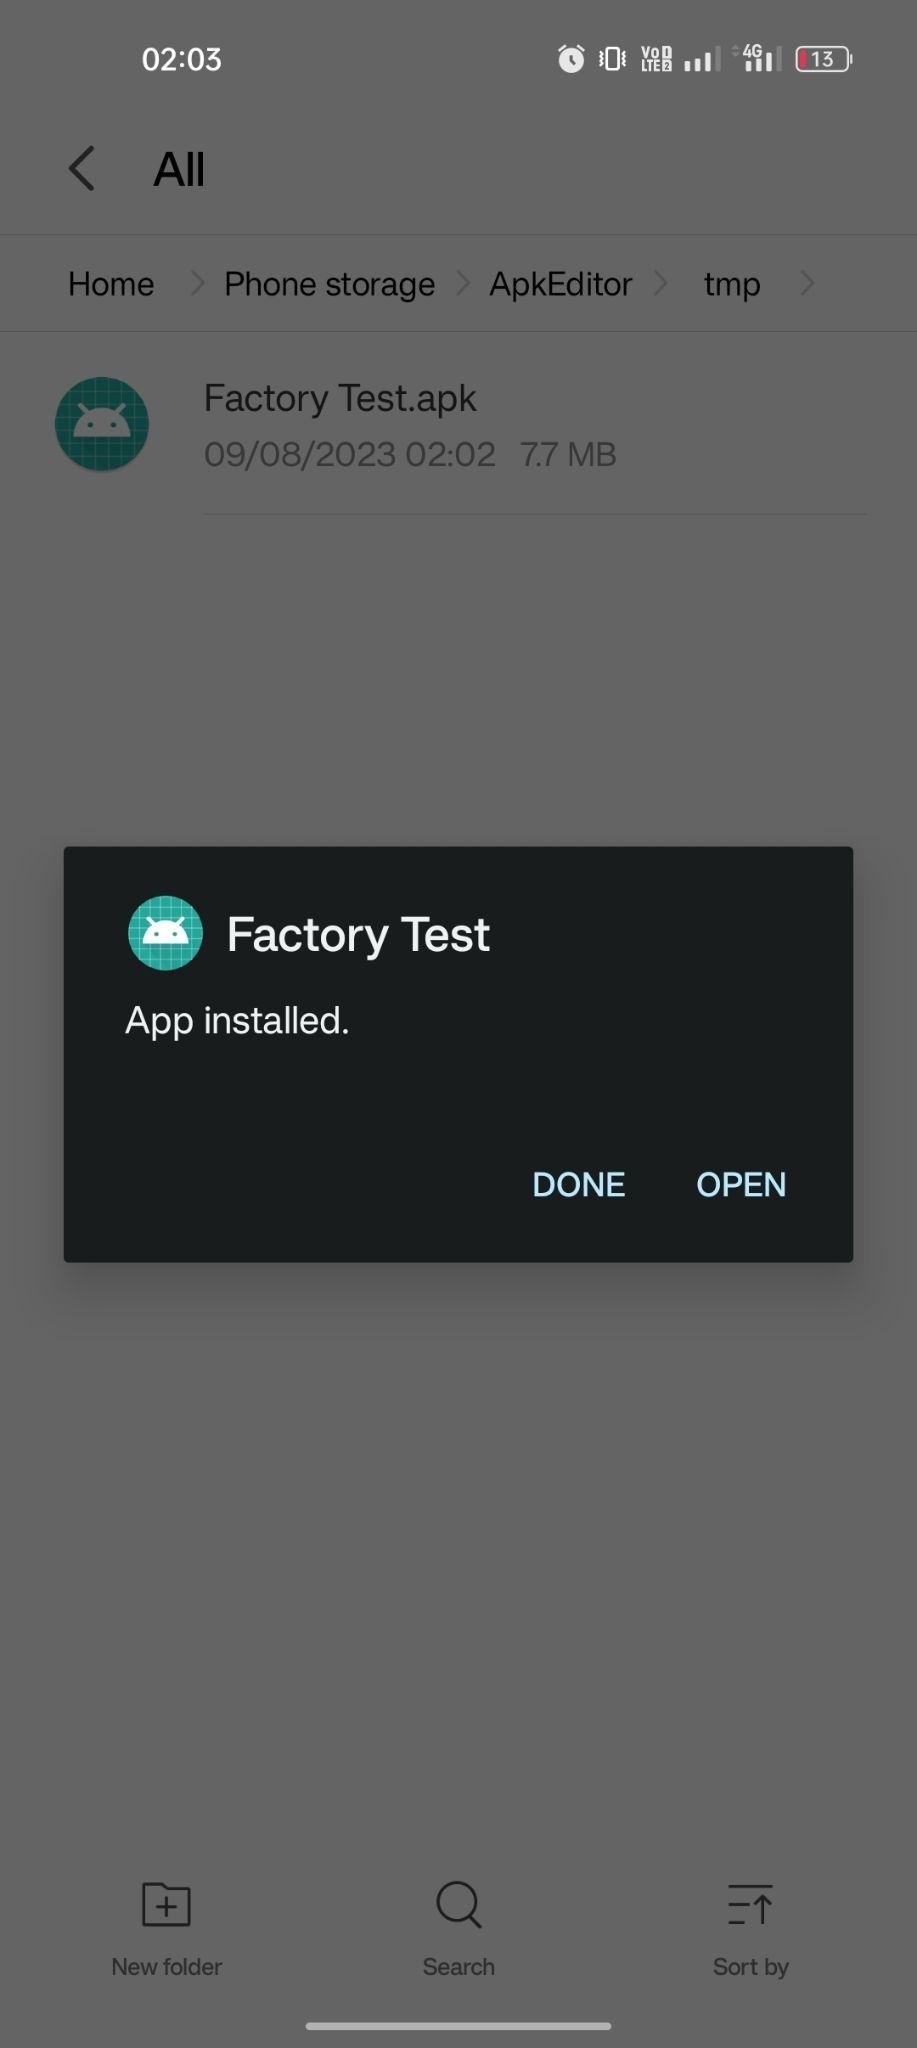 Factory Test apk installed